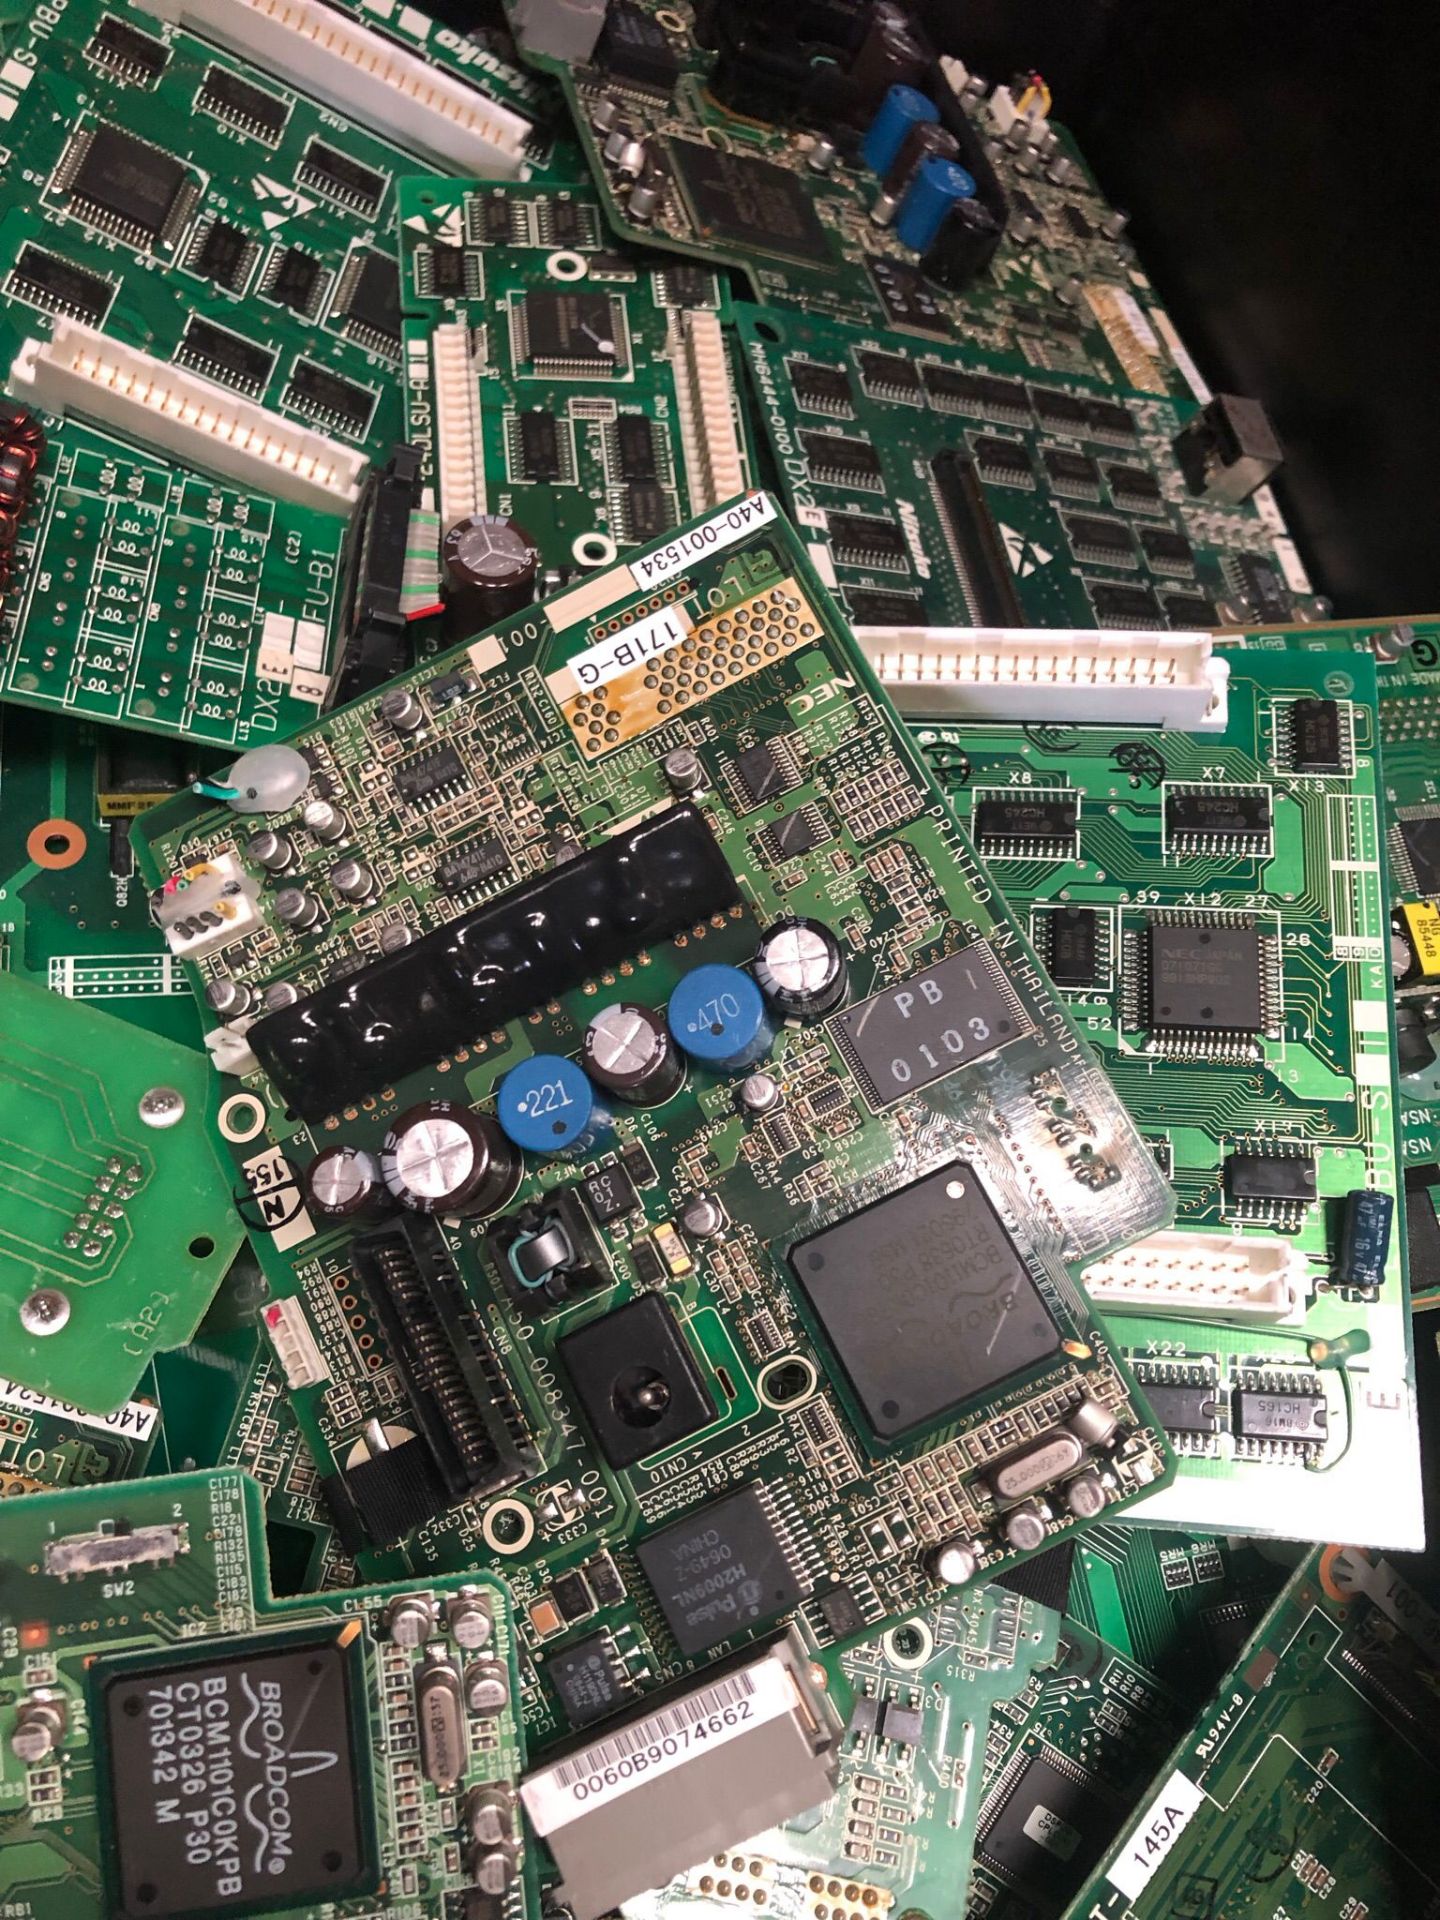 Job Lot Bulk Scrap Motherboards Telecommunications Telecom Gold Refinery Salvage E-waste - Image 3 of 15